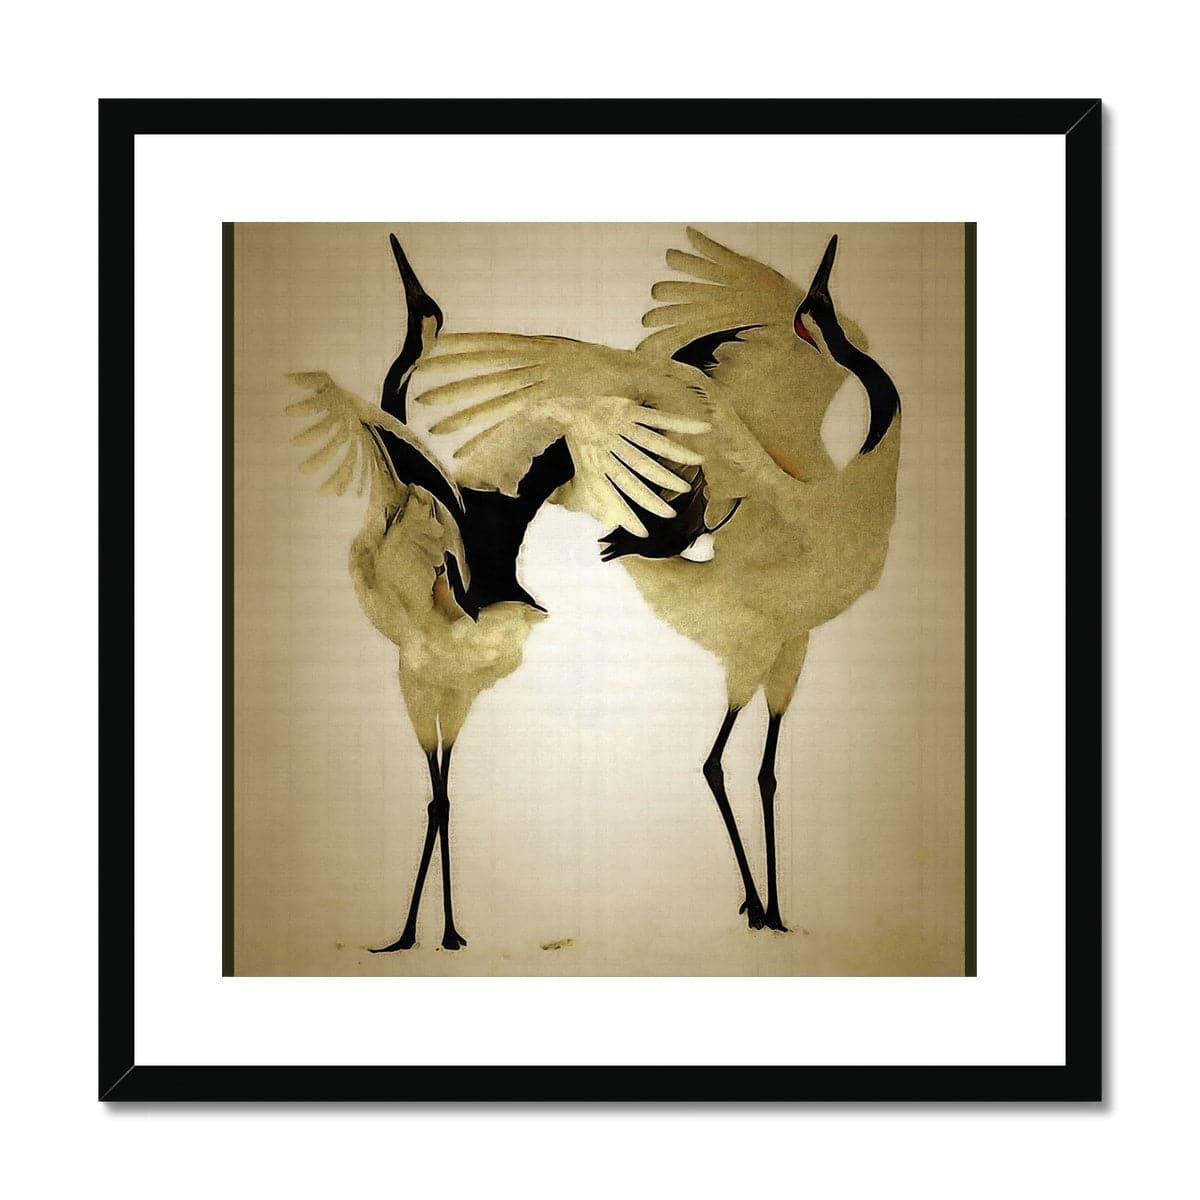 Balting Cranes Framed & Mounted Print